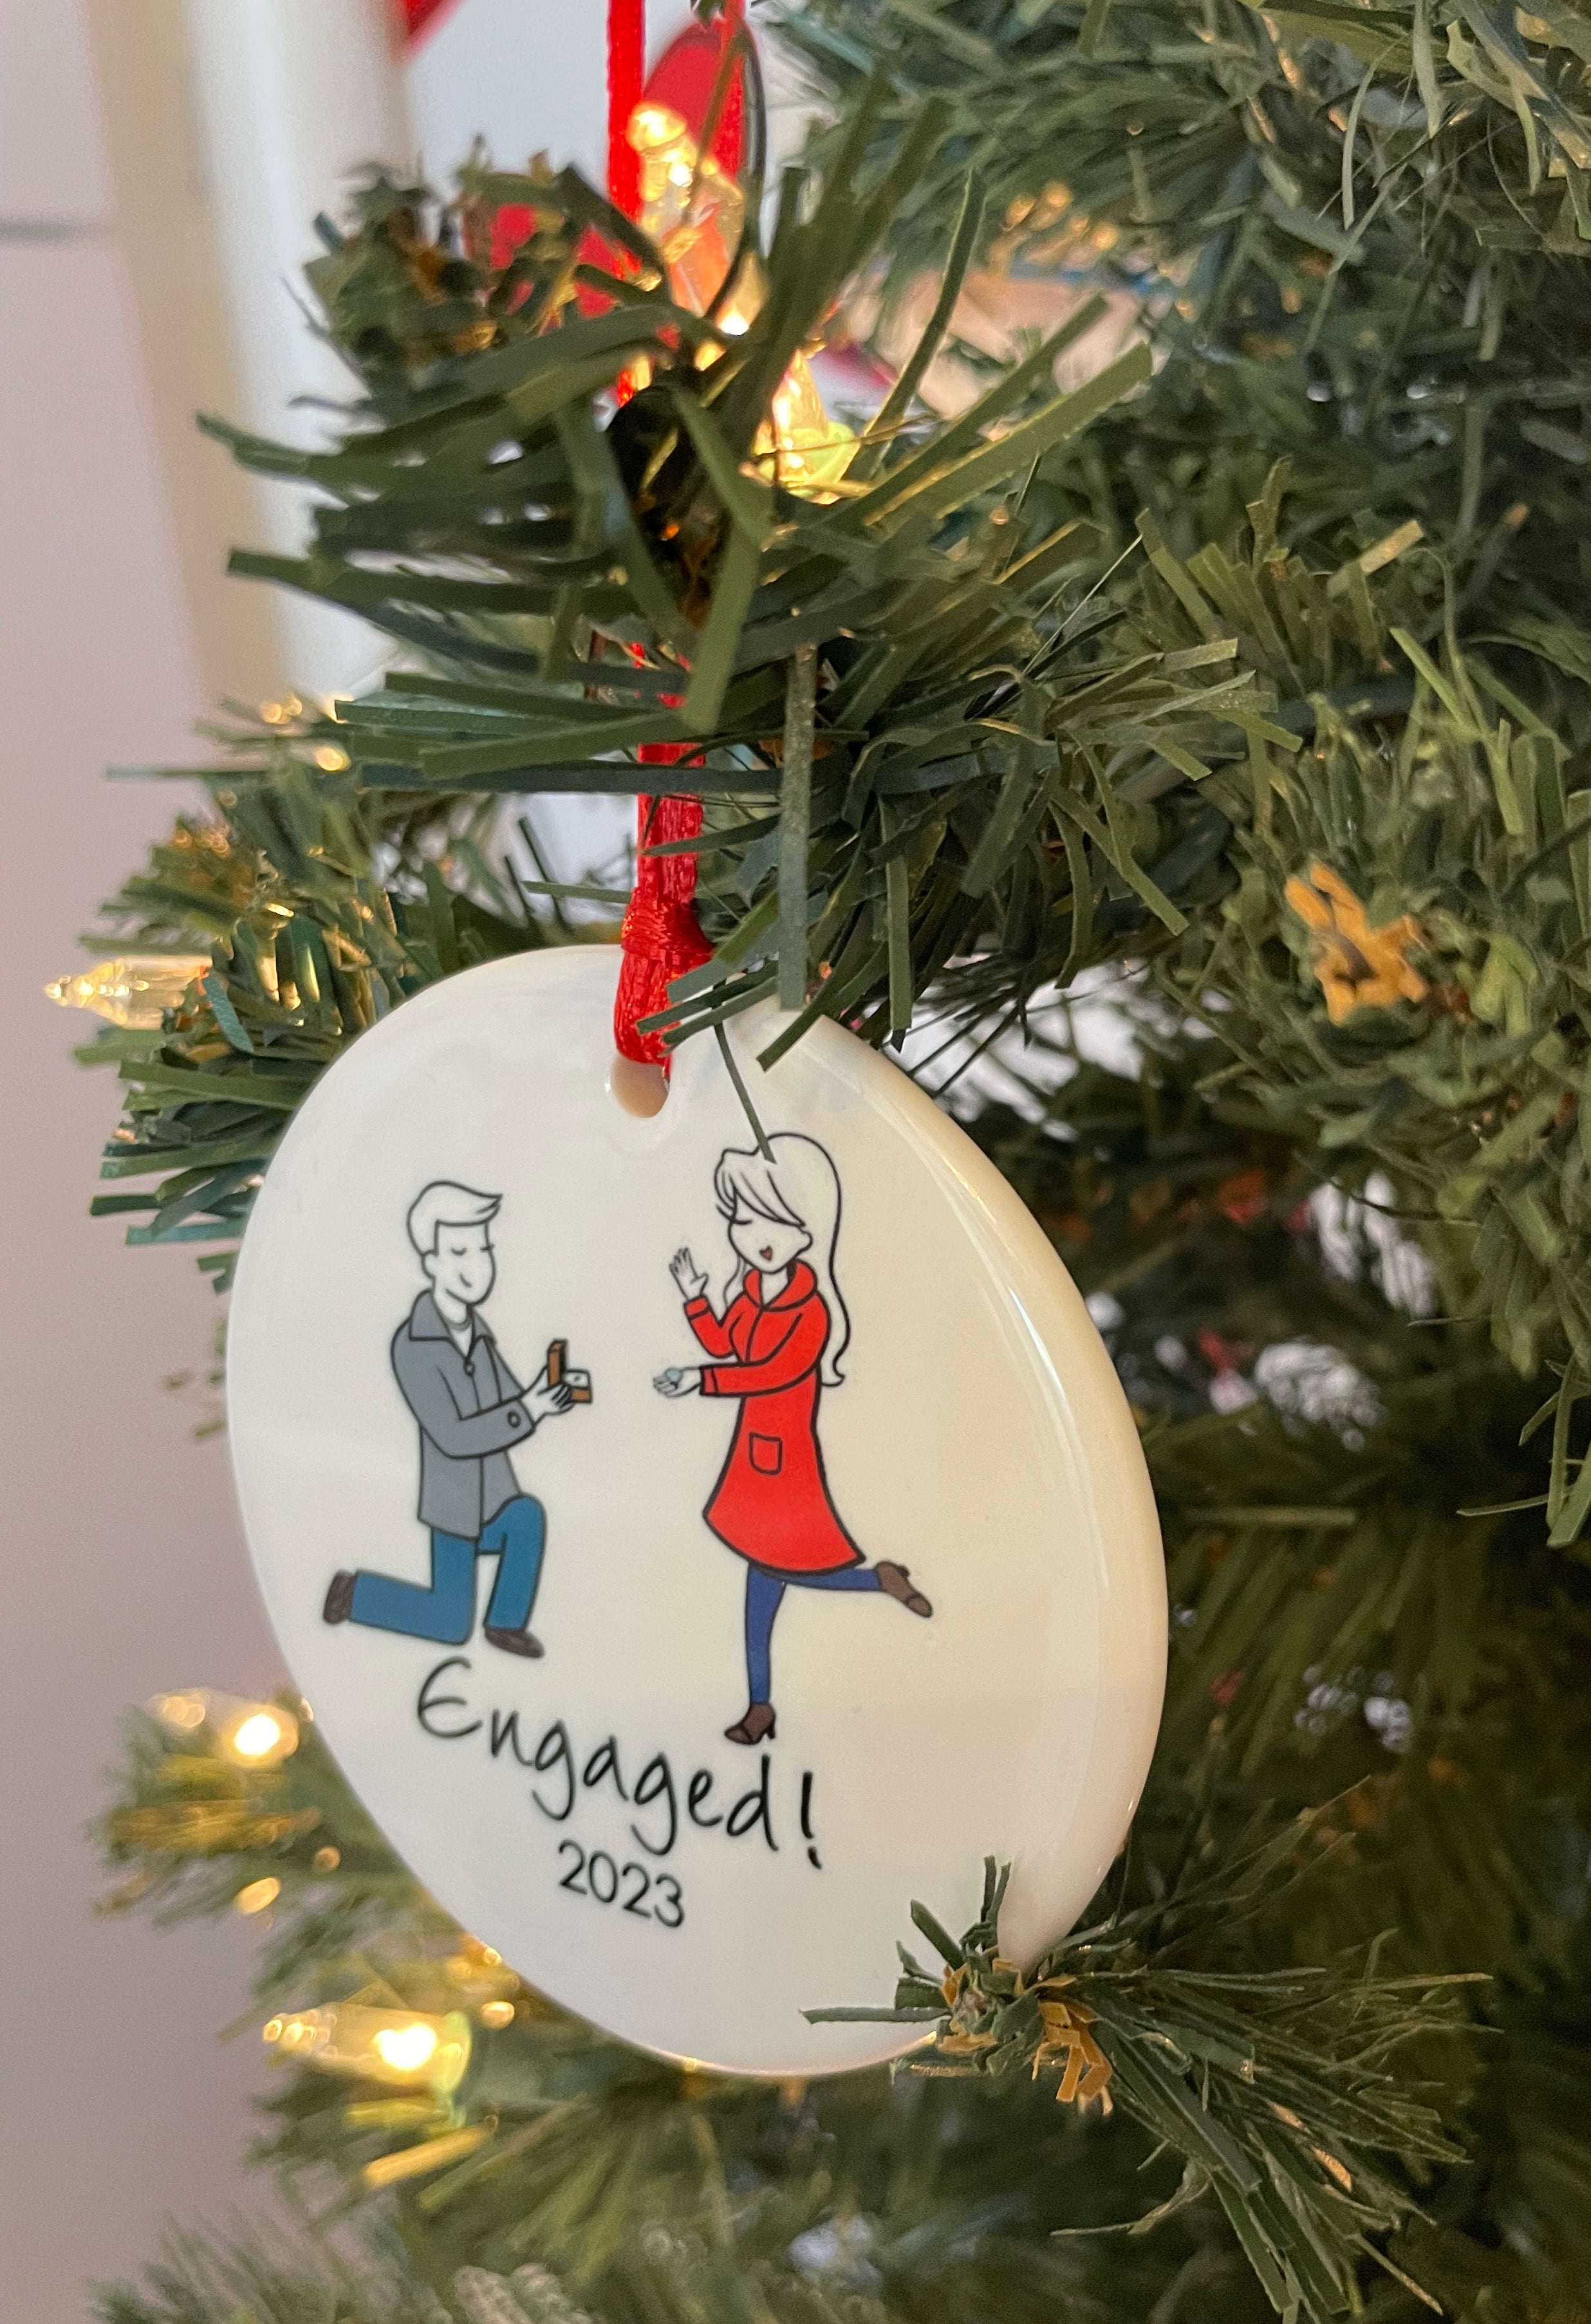 Engagement 2023, Christmas Ornament, Gift